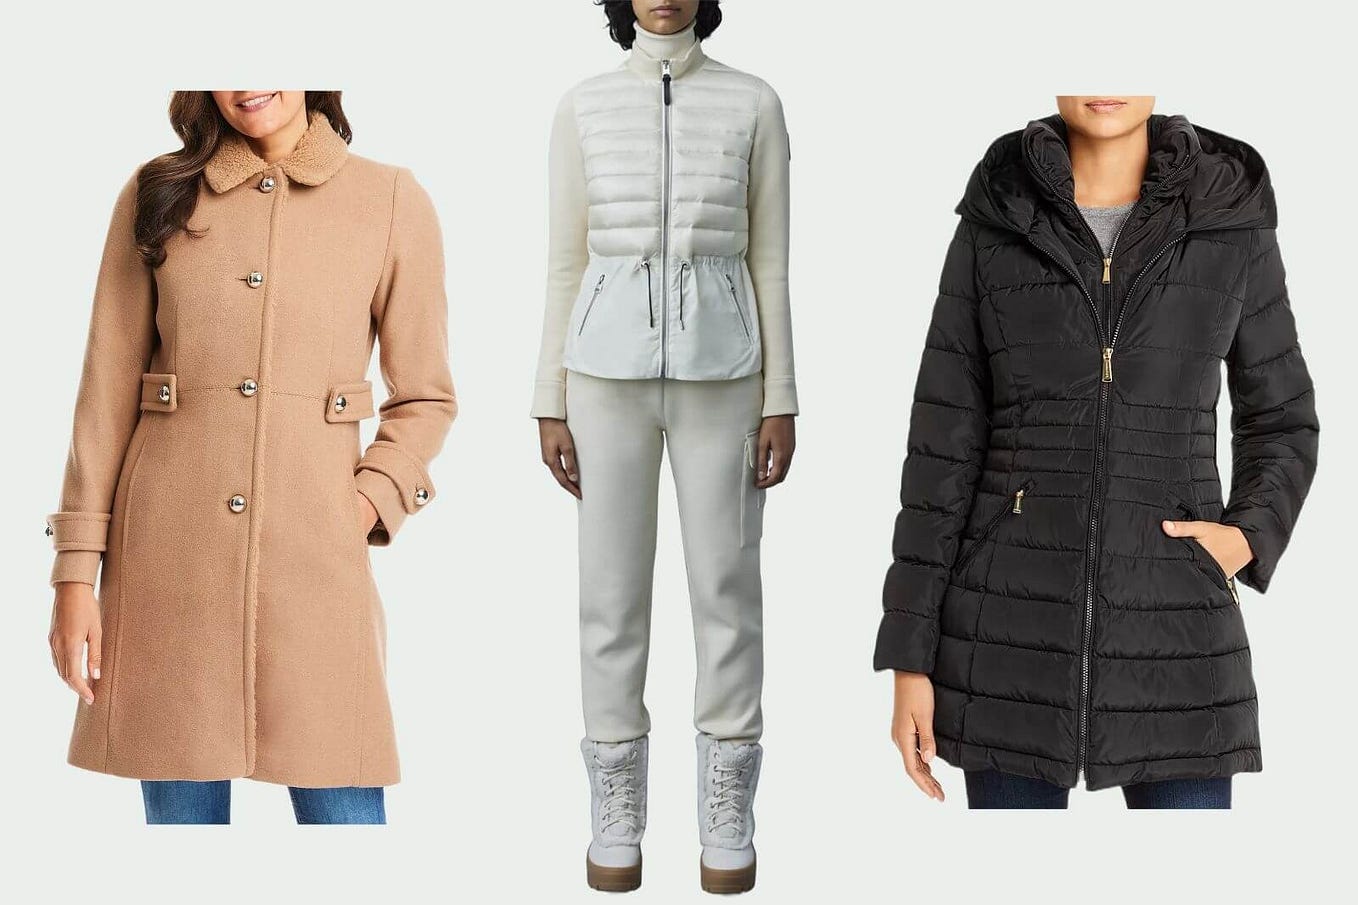 Louis Vuitton cityscape jackets turn you into walking 3D architecture - CNET